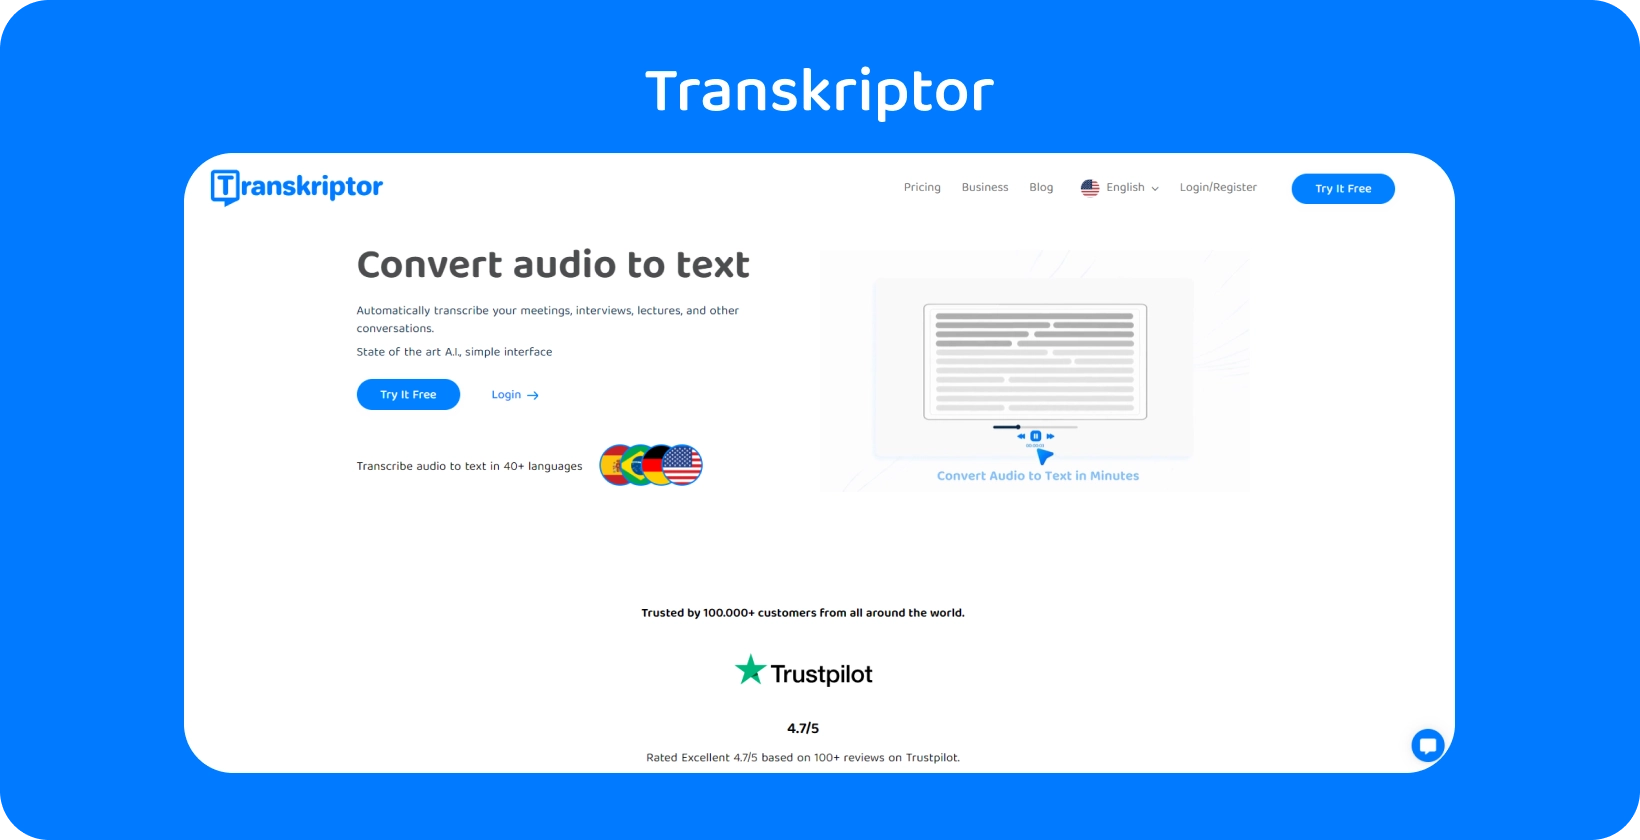 Transkriptor的界面展示了会议助手功能，简化了定性研究转录。